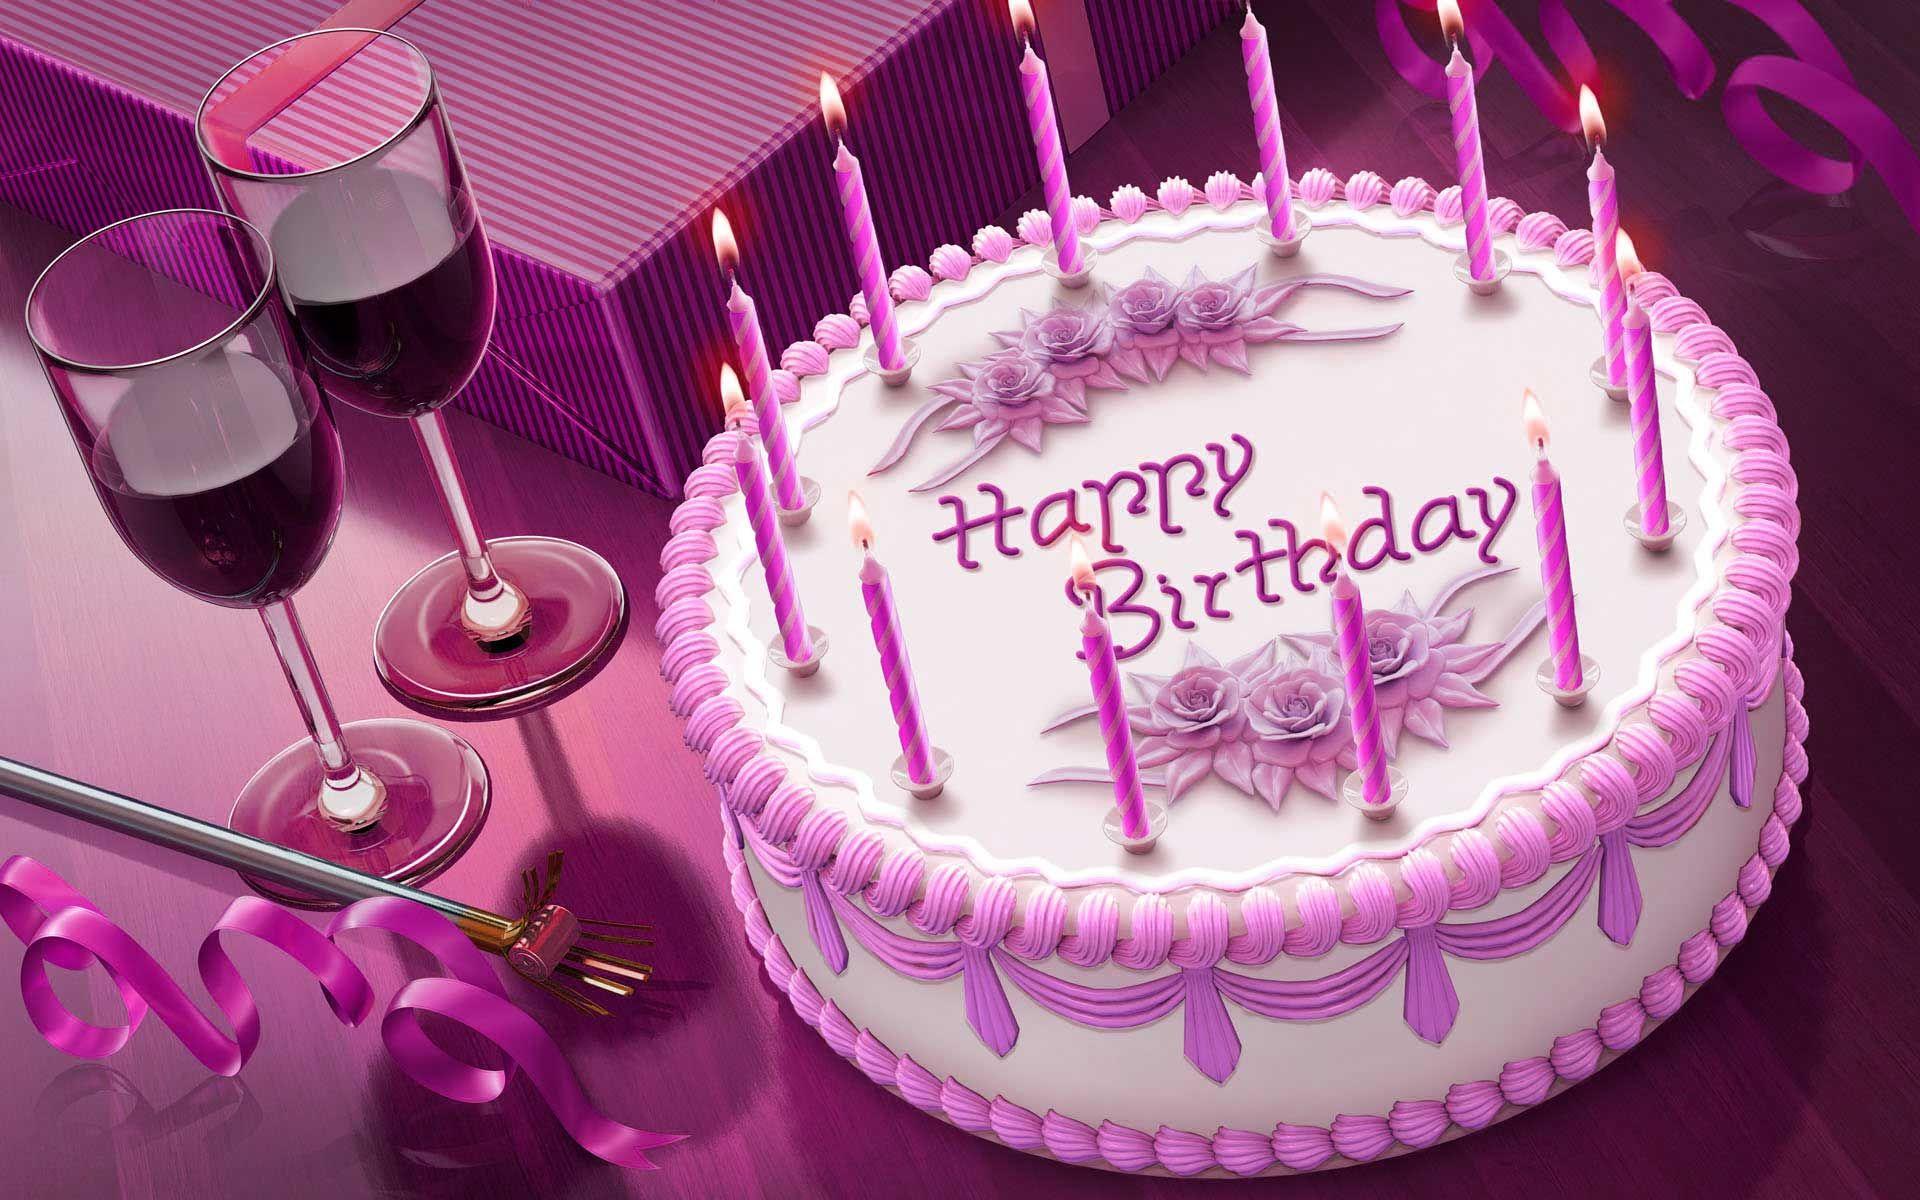 Happy Birthday Deepak Song|Panjery|Happy Birthday Deepak - Single| Listen  to new songs and mp3 song download Happy Birthday Deepak free online on  Gaana.com